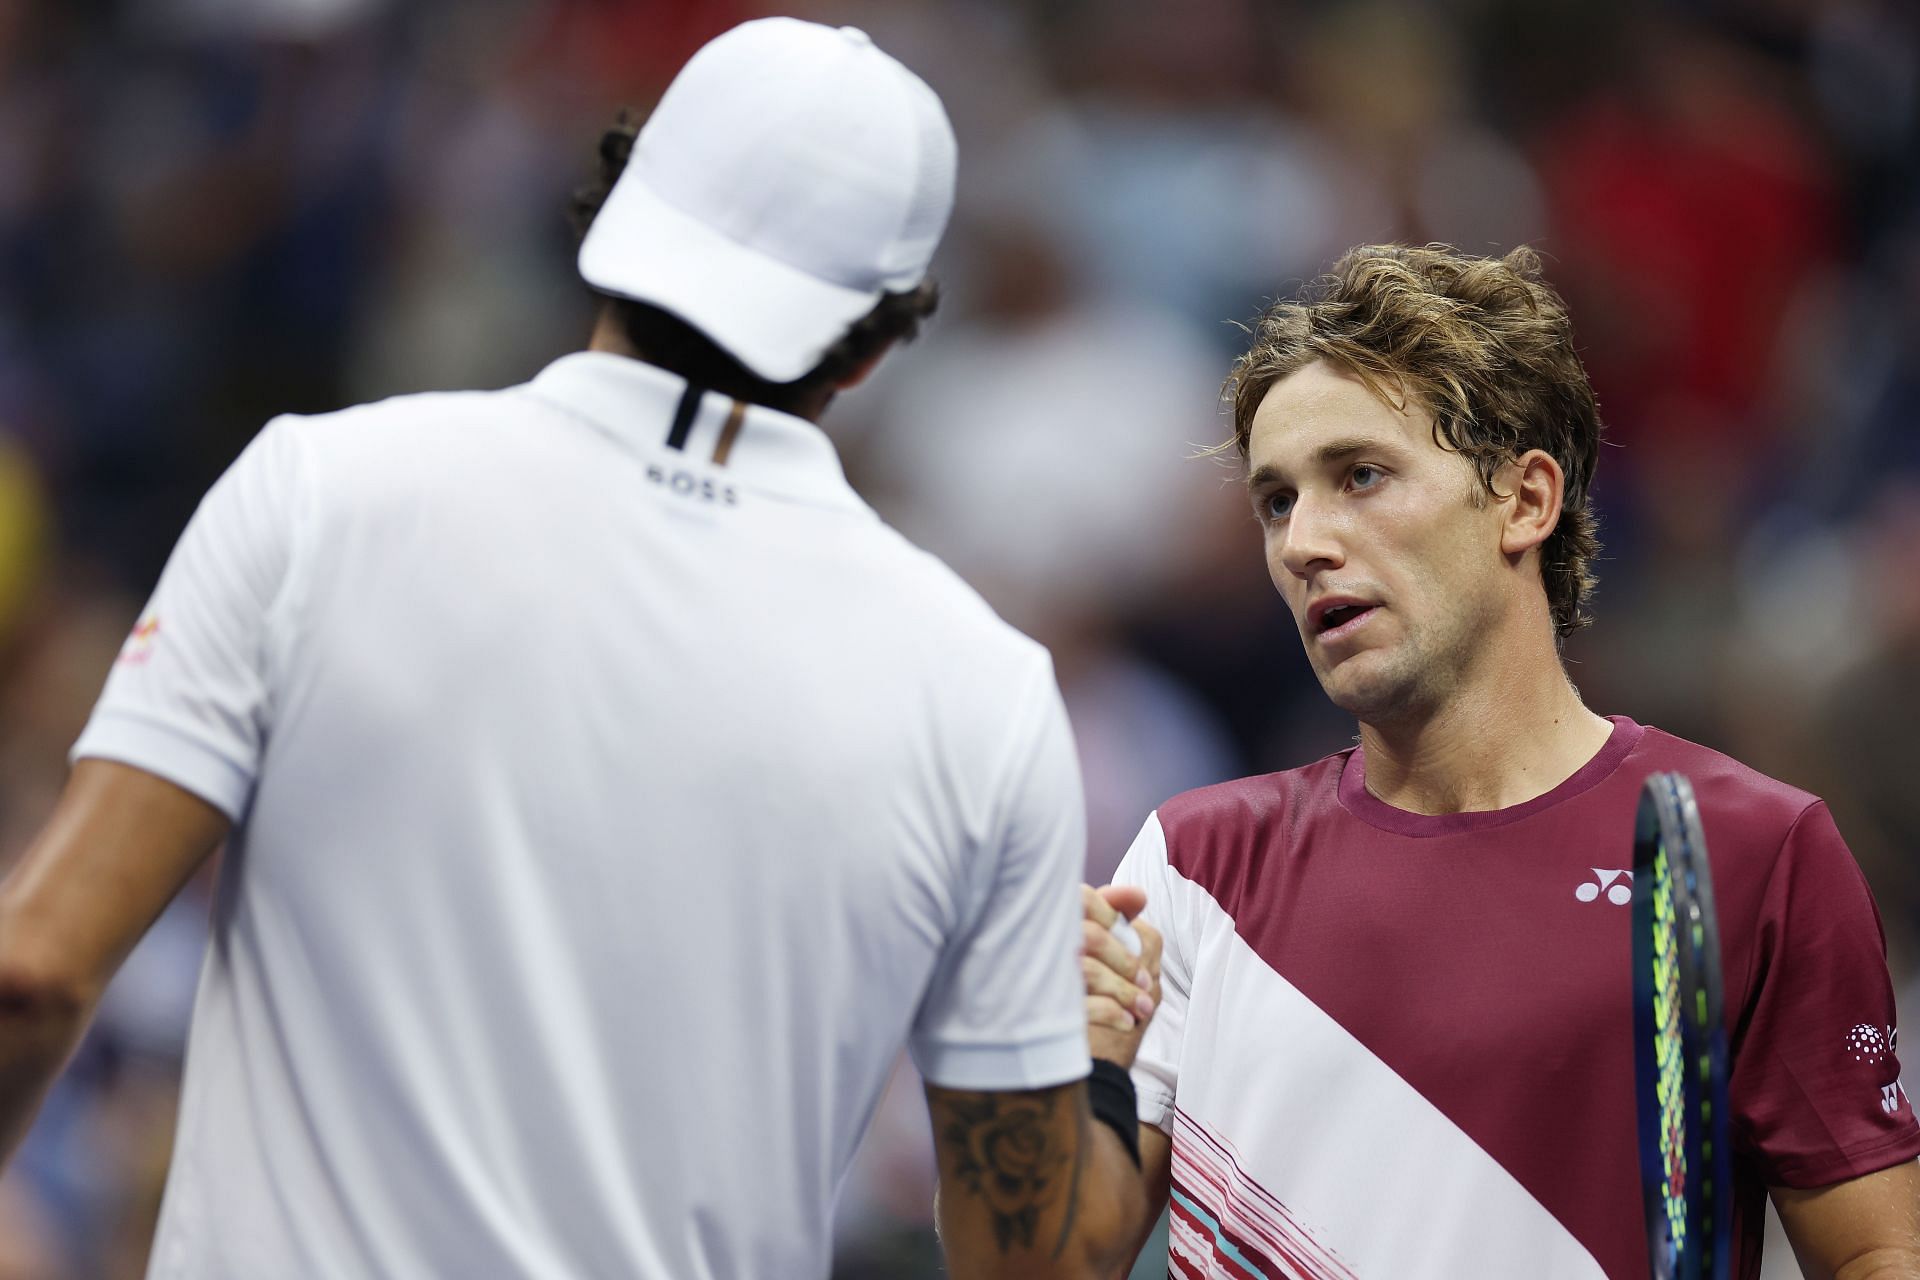 Casper Ruud beat Matteo Berrettini to reach the semifinals of the US Open